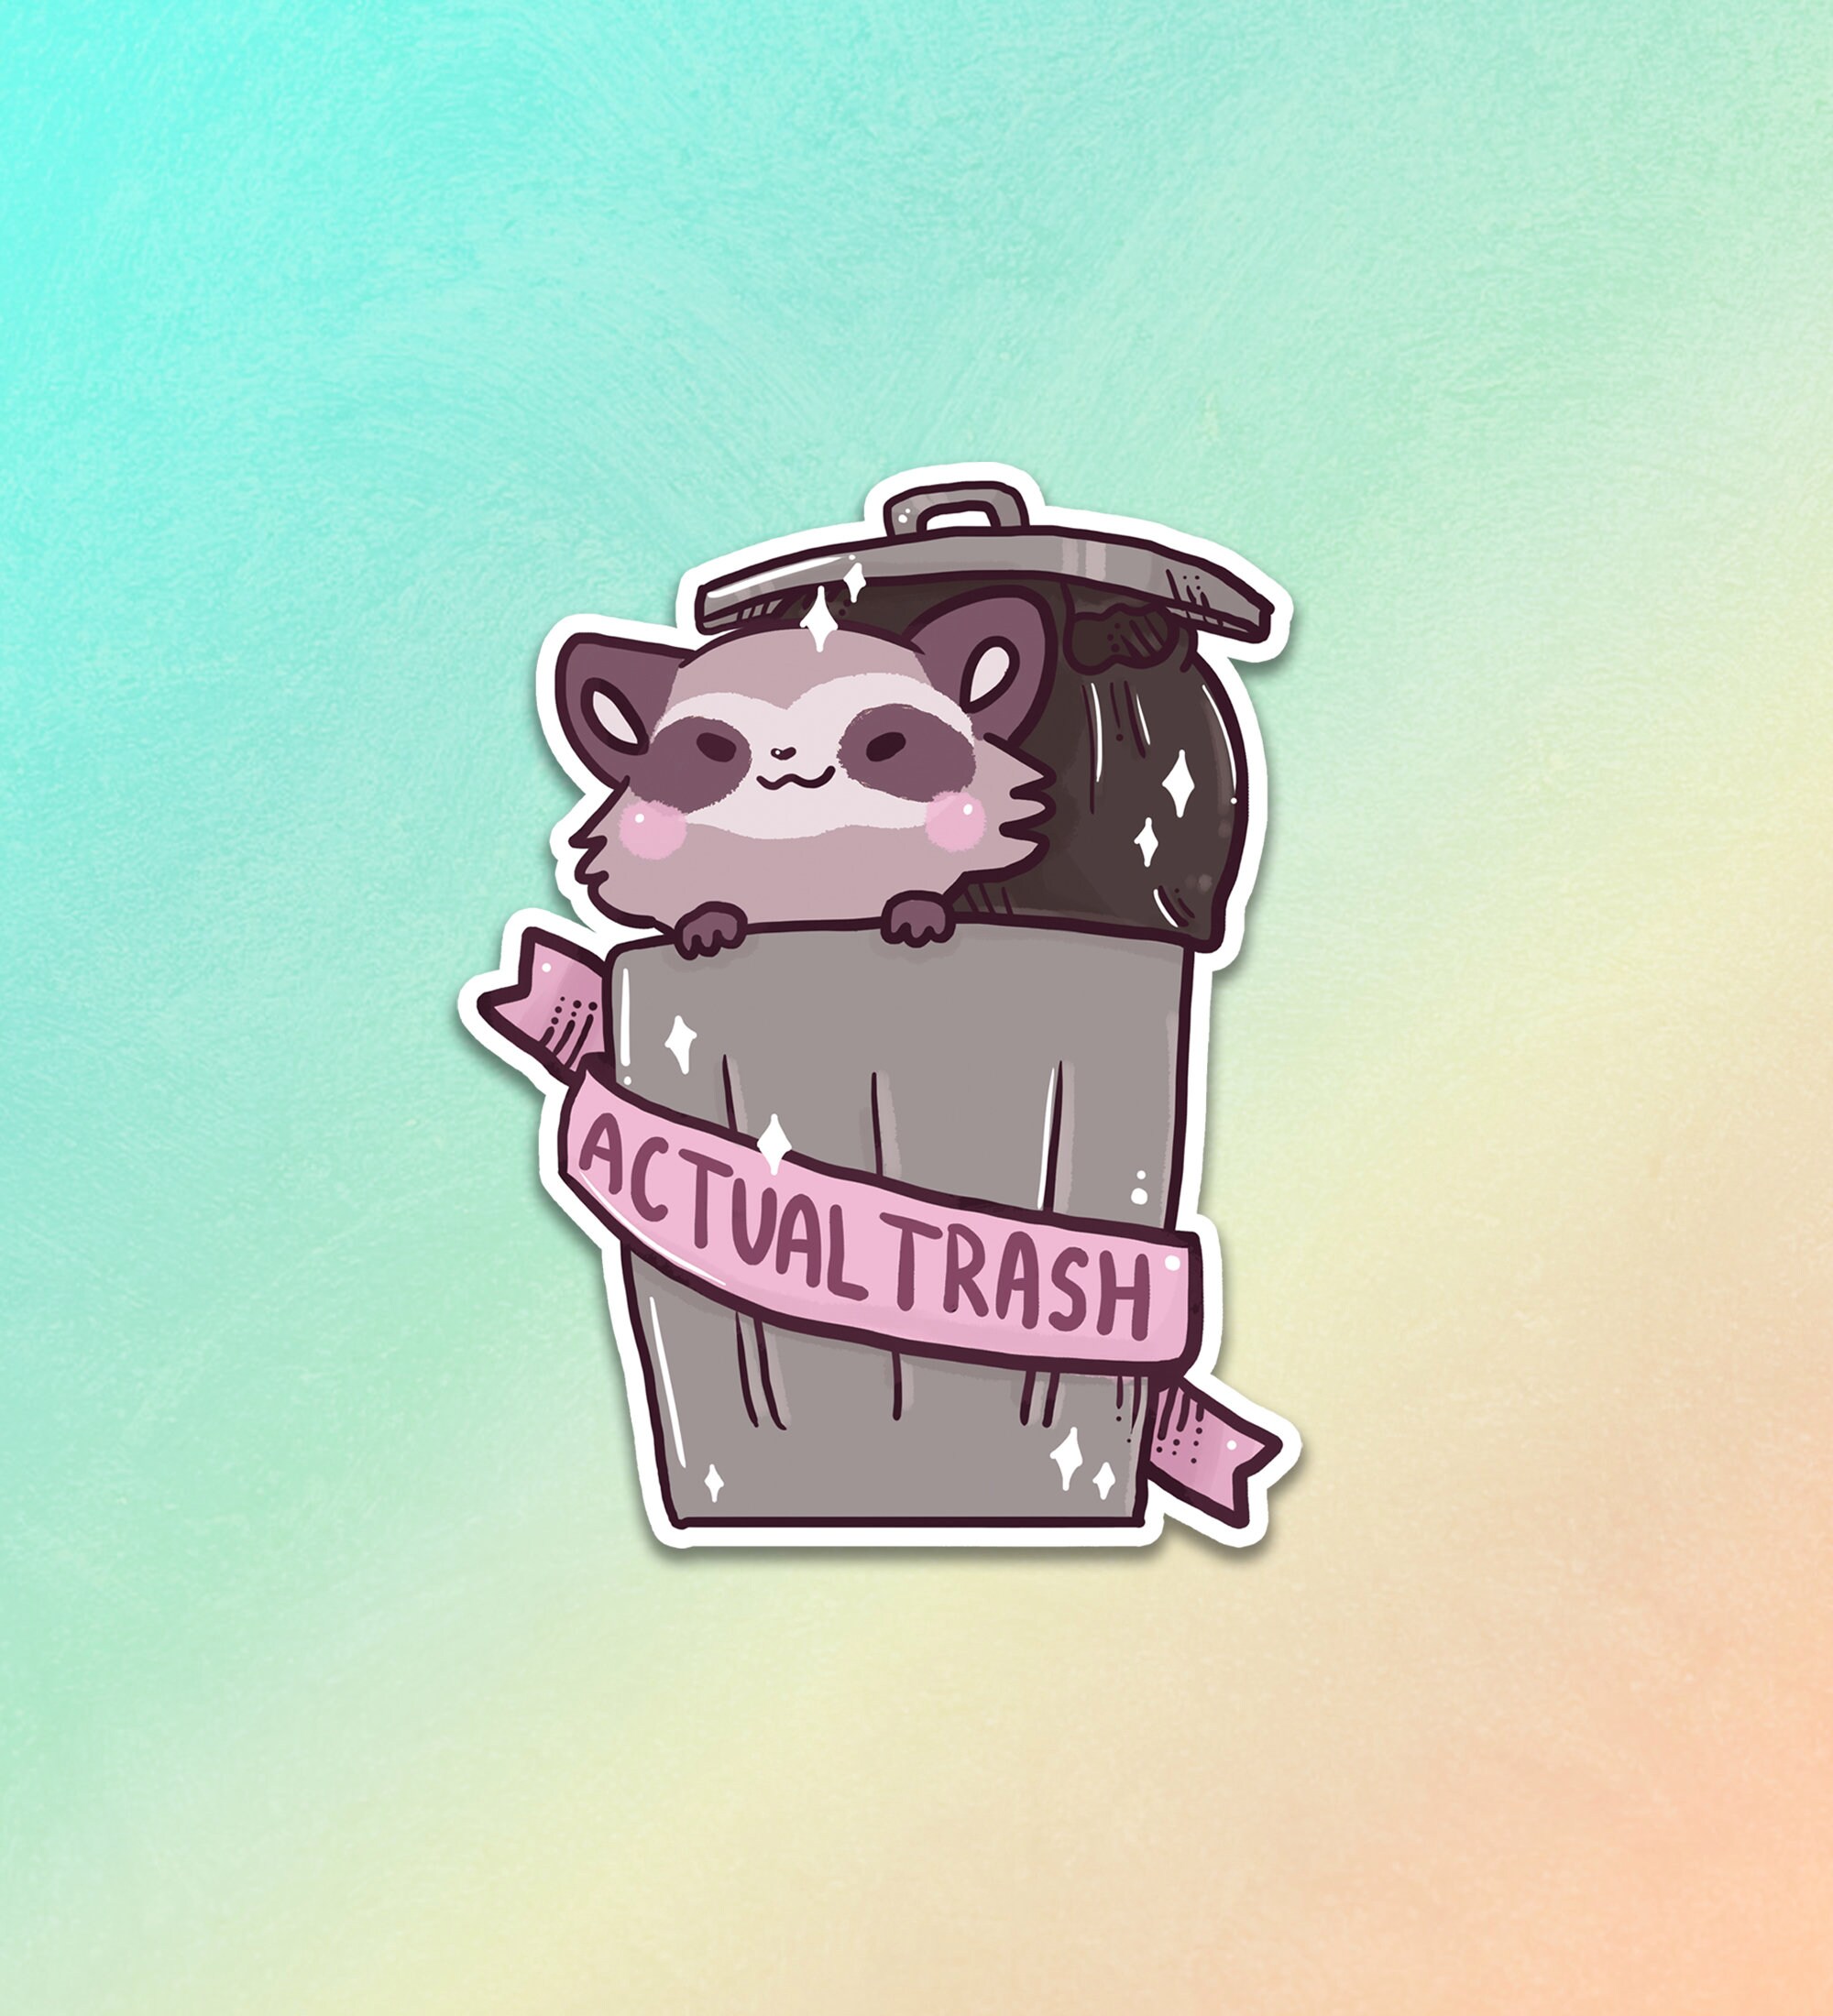 Trash Talk is always interesting 🦝 Patreon.com/ScottMetzgerCartoons  #raccoon #raccoons #trashpanda #podcast #podcasting